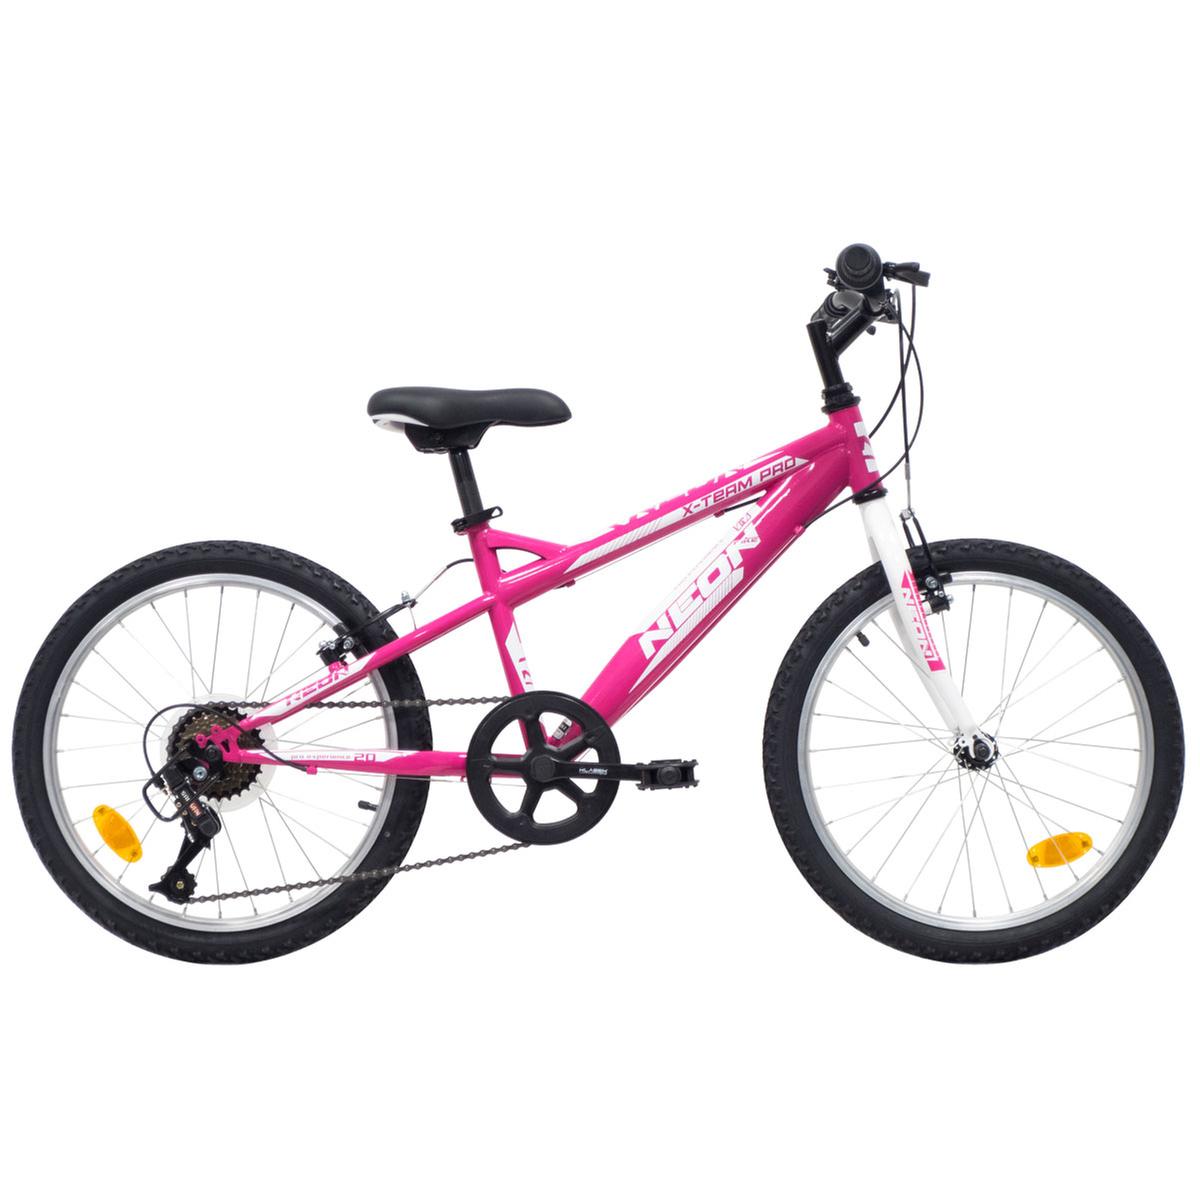 Desalentar gatear esconder Avigo - Bicicleta Neon 20 Pulgadas Rosa | Bicis 20' Fanatsia | Toys"R"Us  España